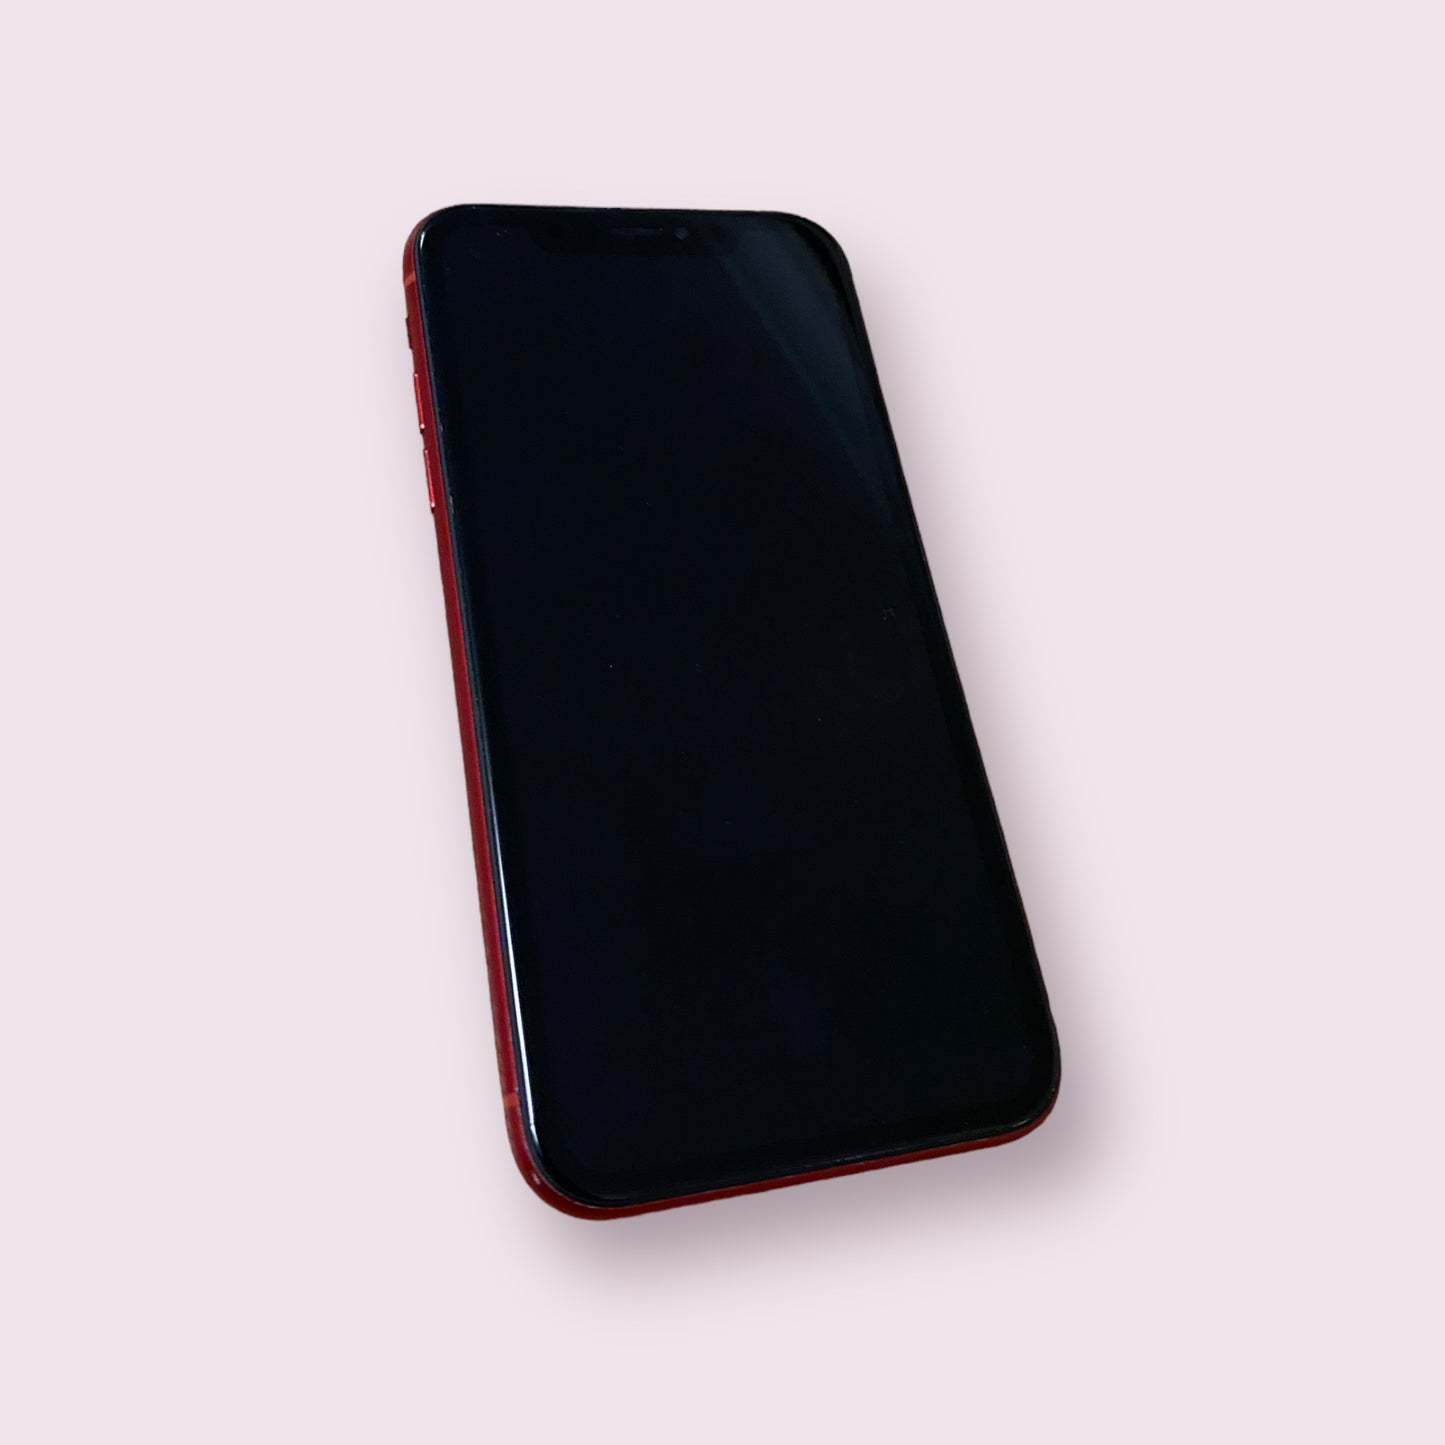 NO FACE ID Apple iPhone XR 64GB Red Unlocked - Grade B